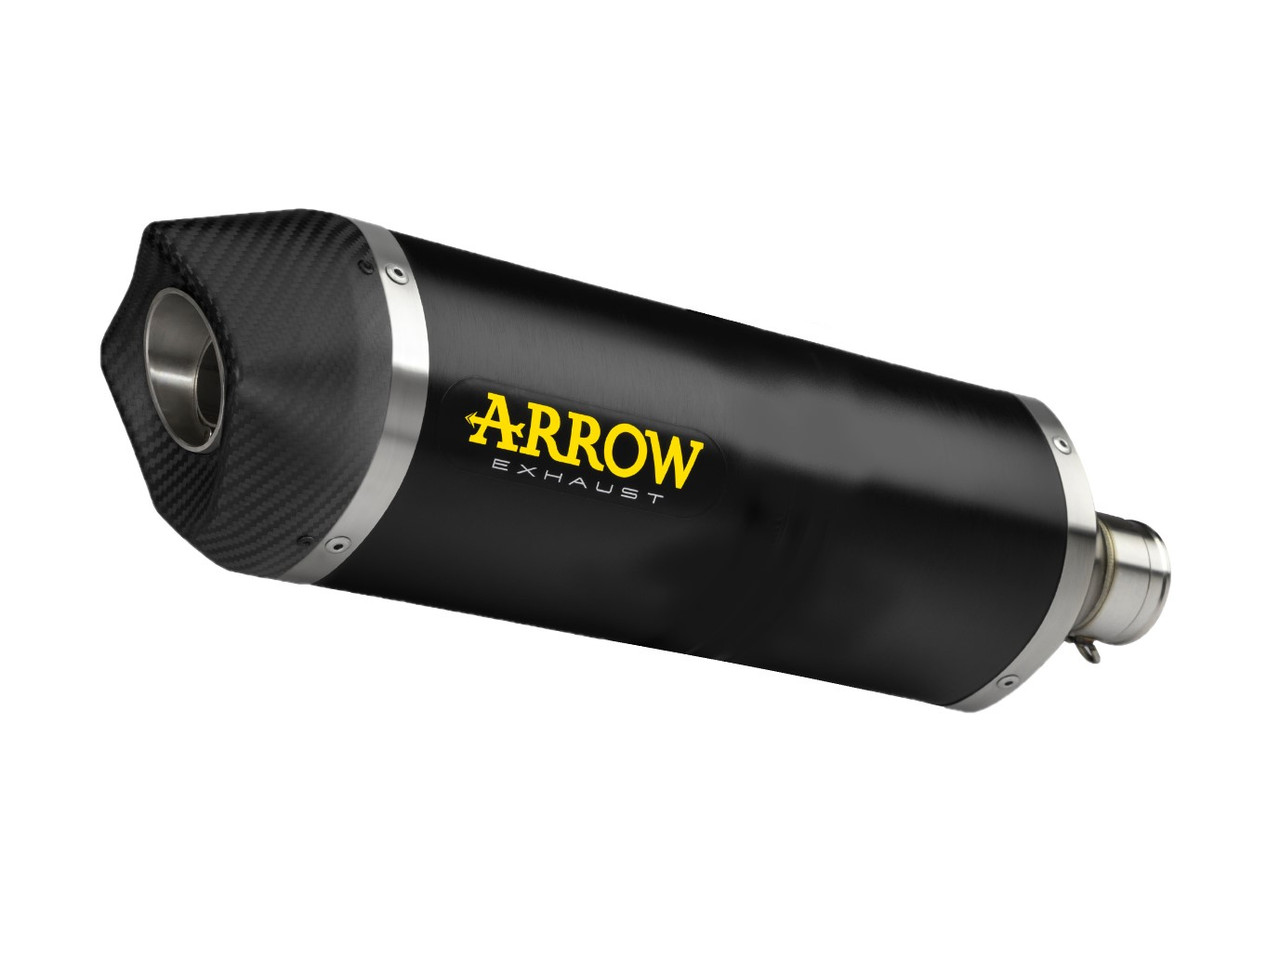 ARROW ARROW:アロー Pro Race silencer サイレンサー素材 通販